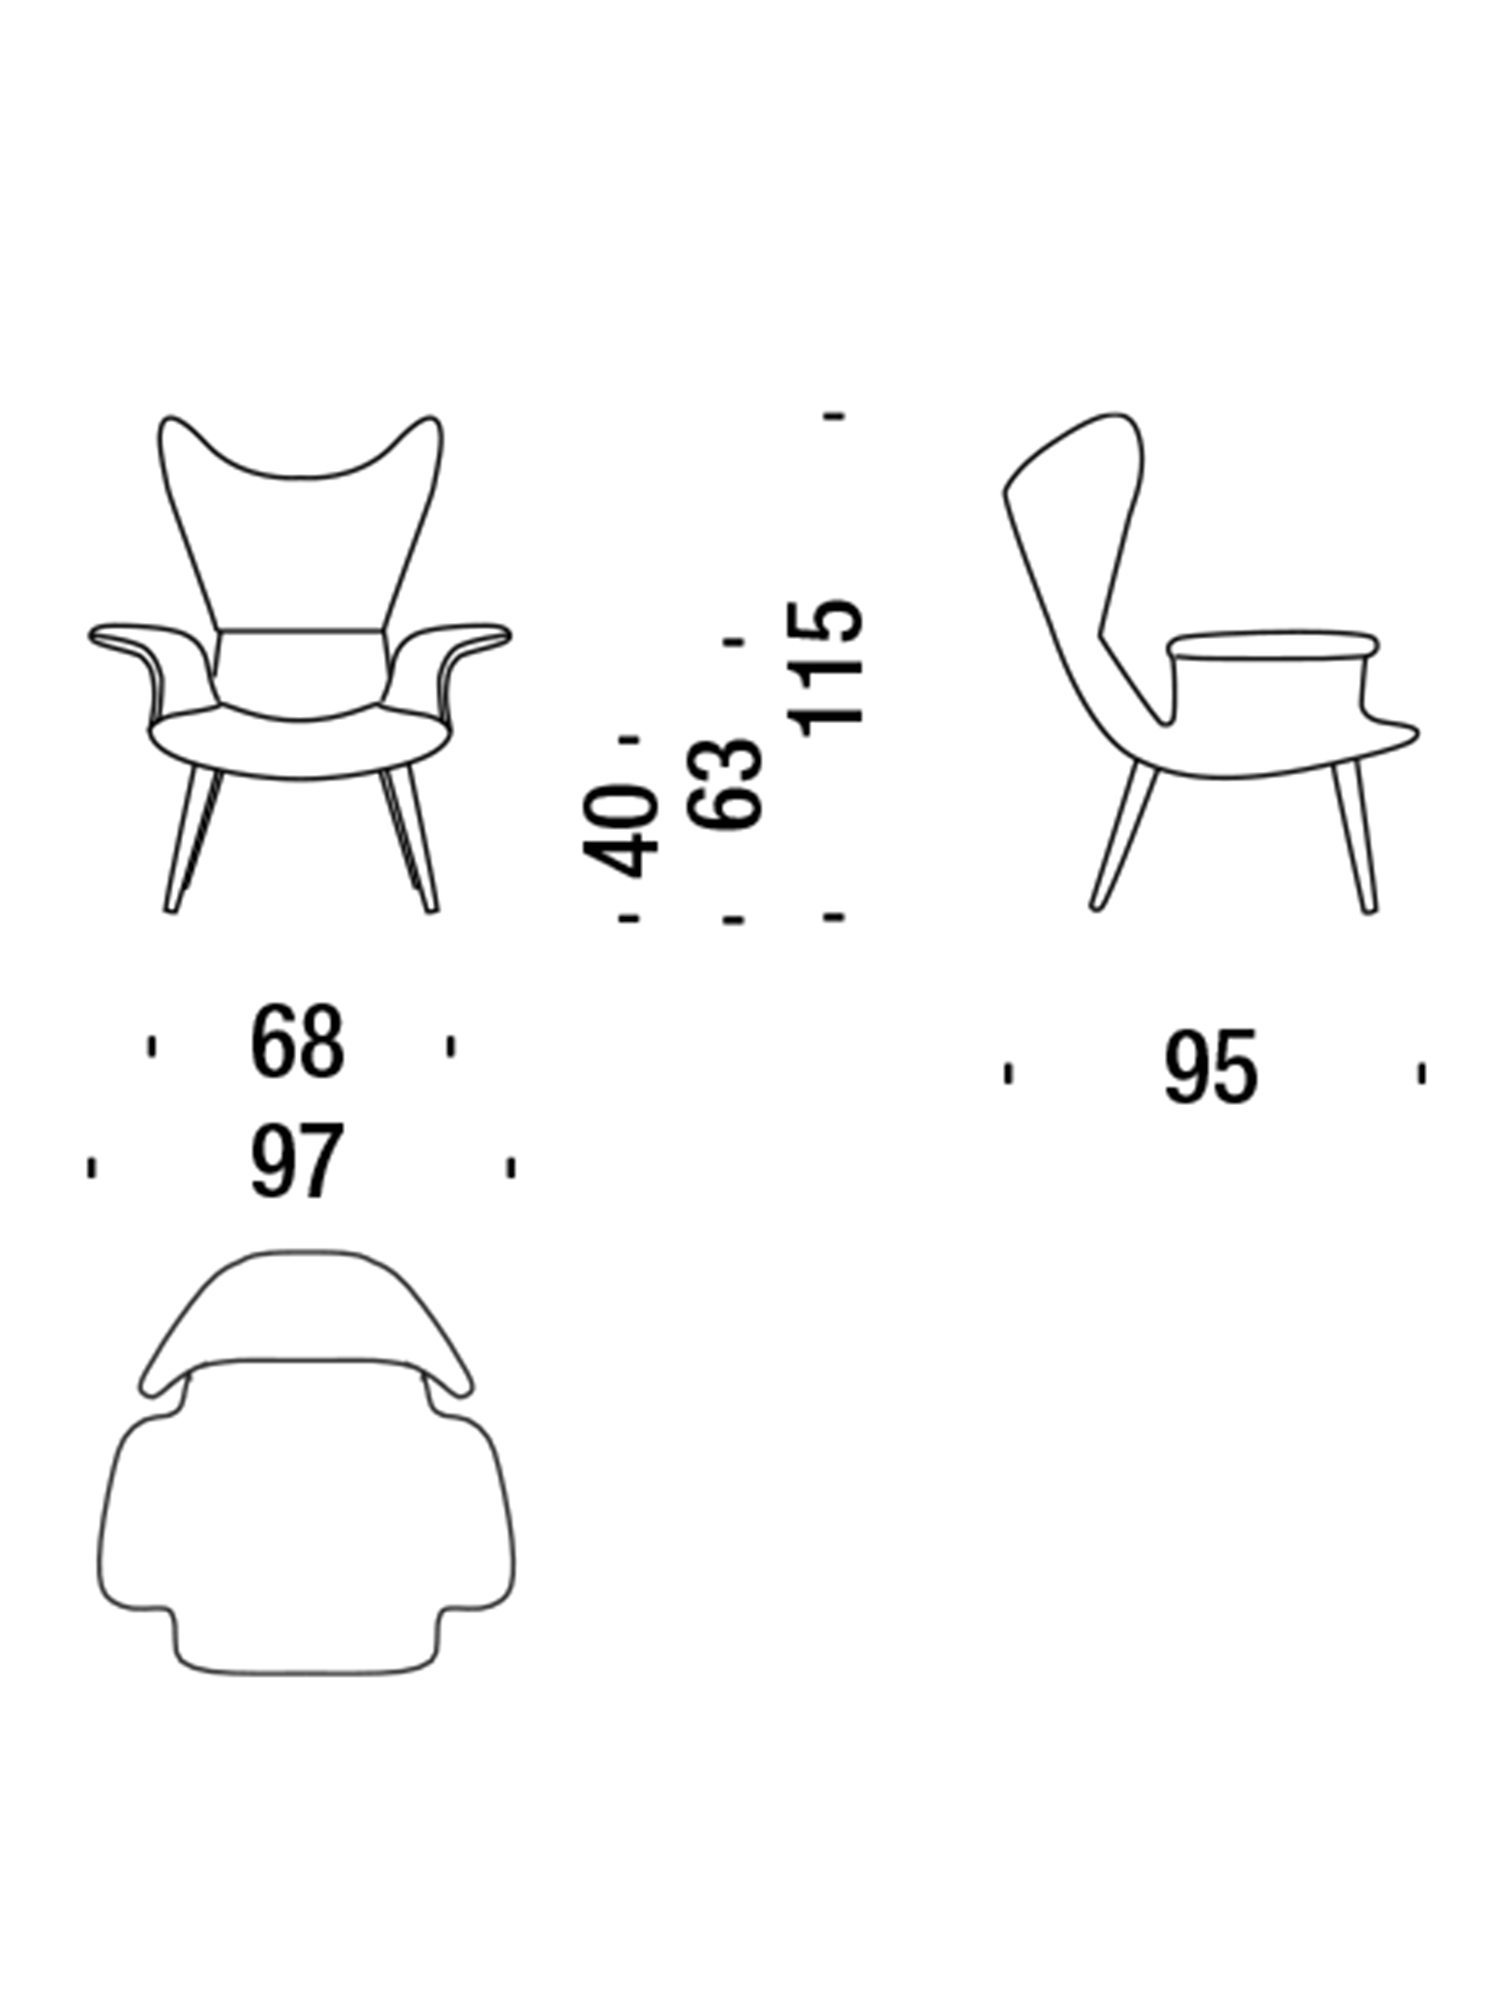 Diesel - DL2H05 LONGWAVE, Unisex High back lounge chair in Grey - Image 3